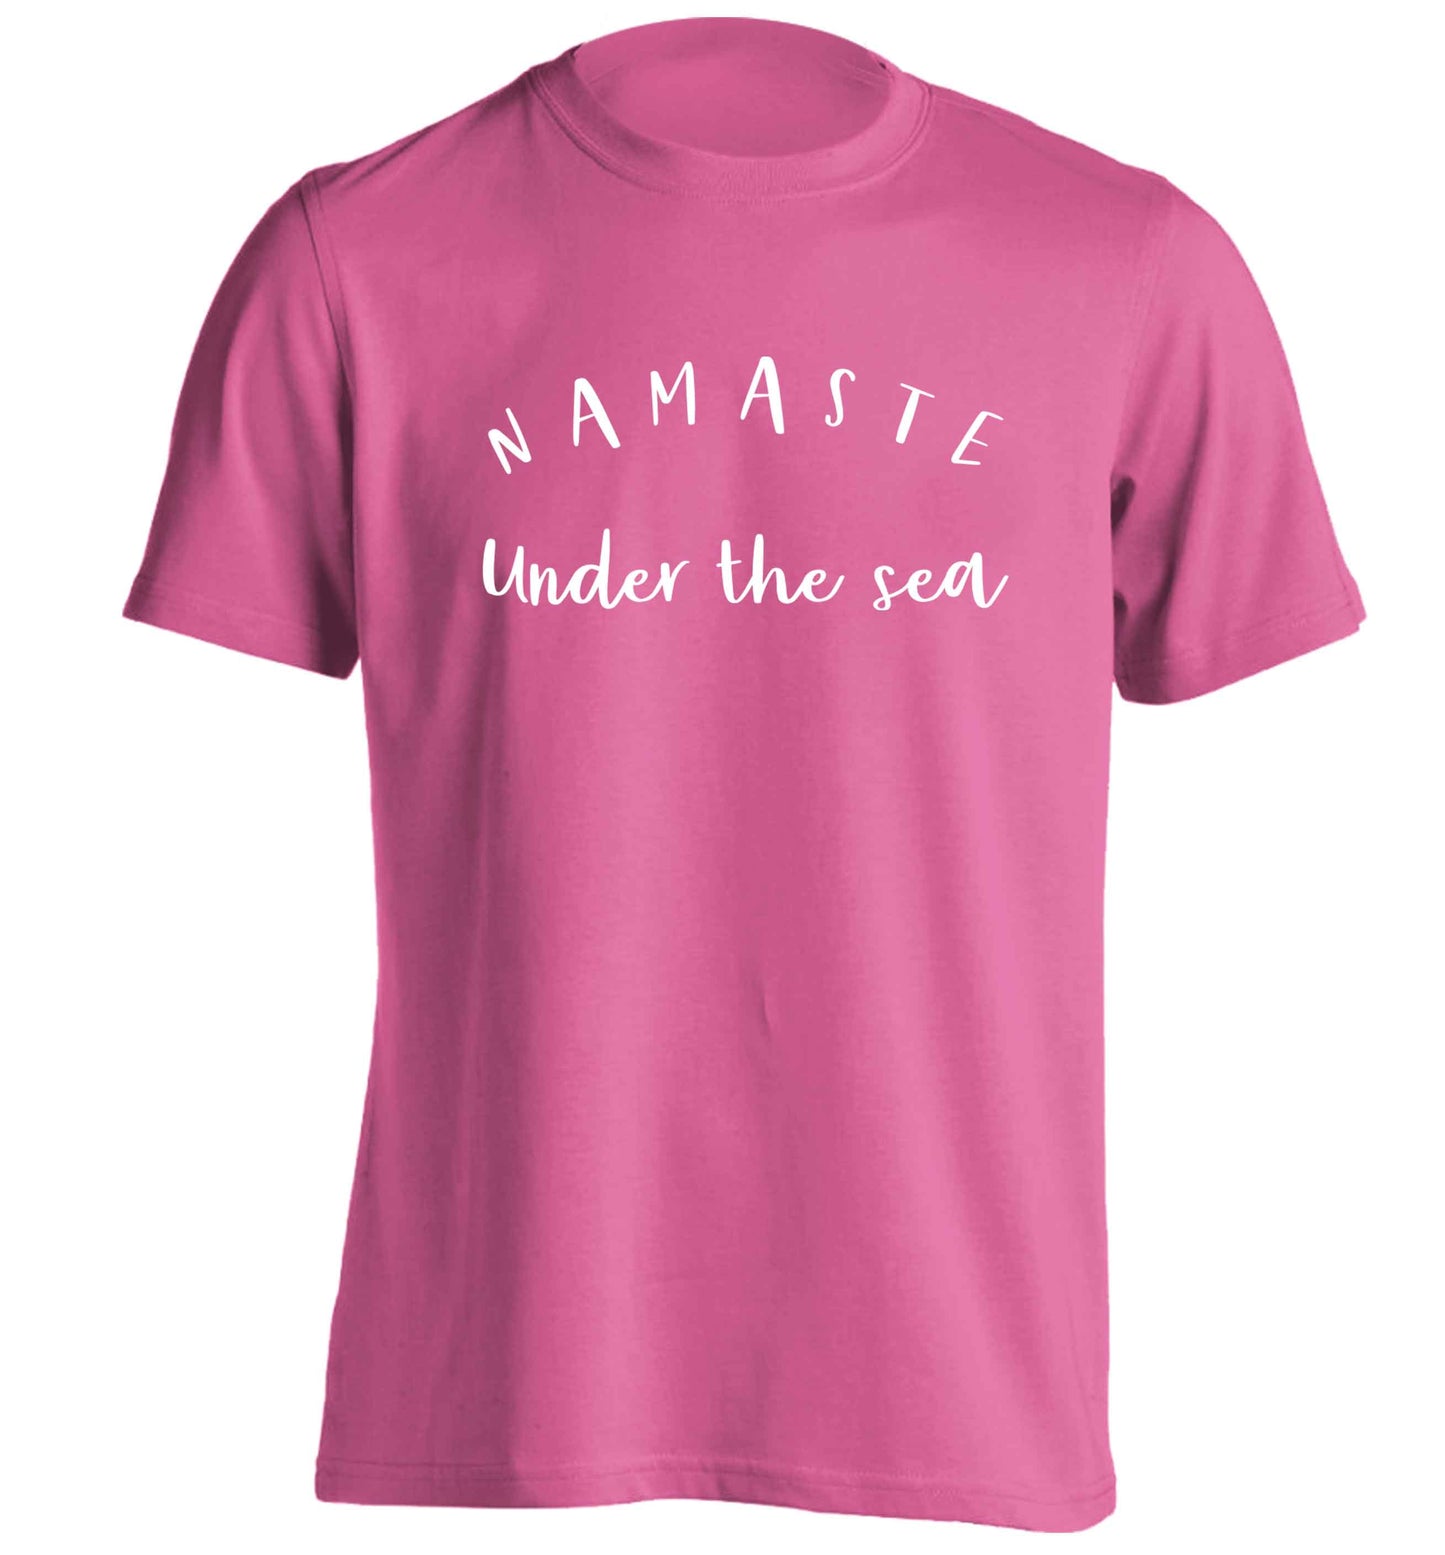 Namaste under the water adults unisex pink Tshirt 2XL